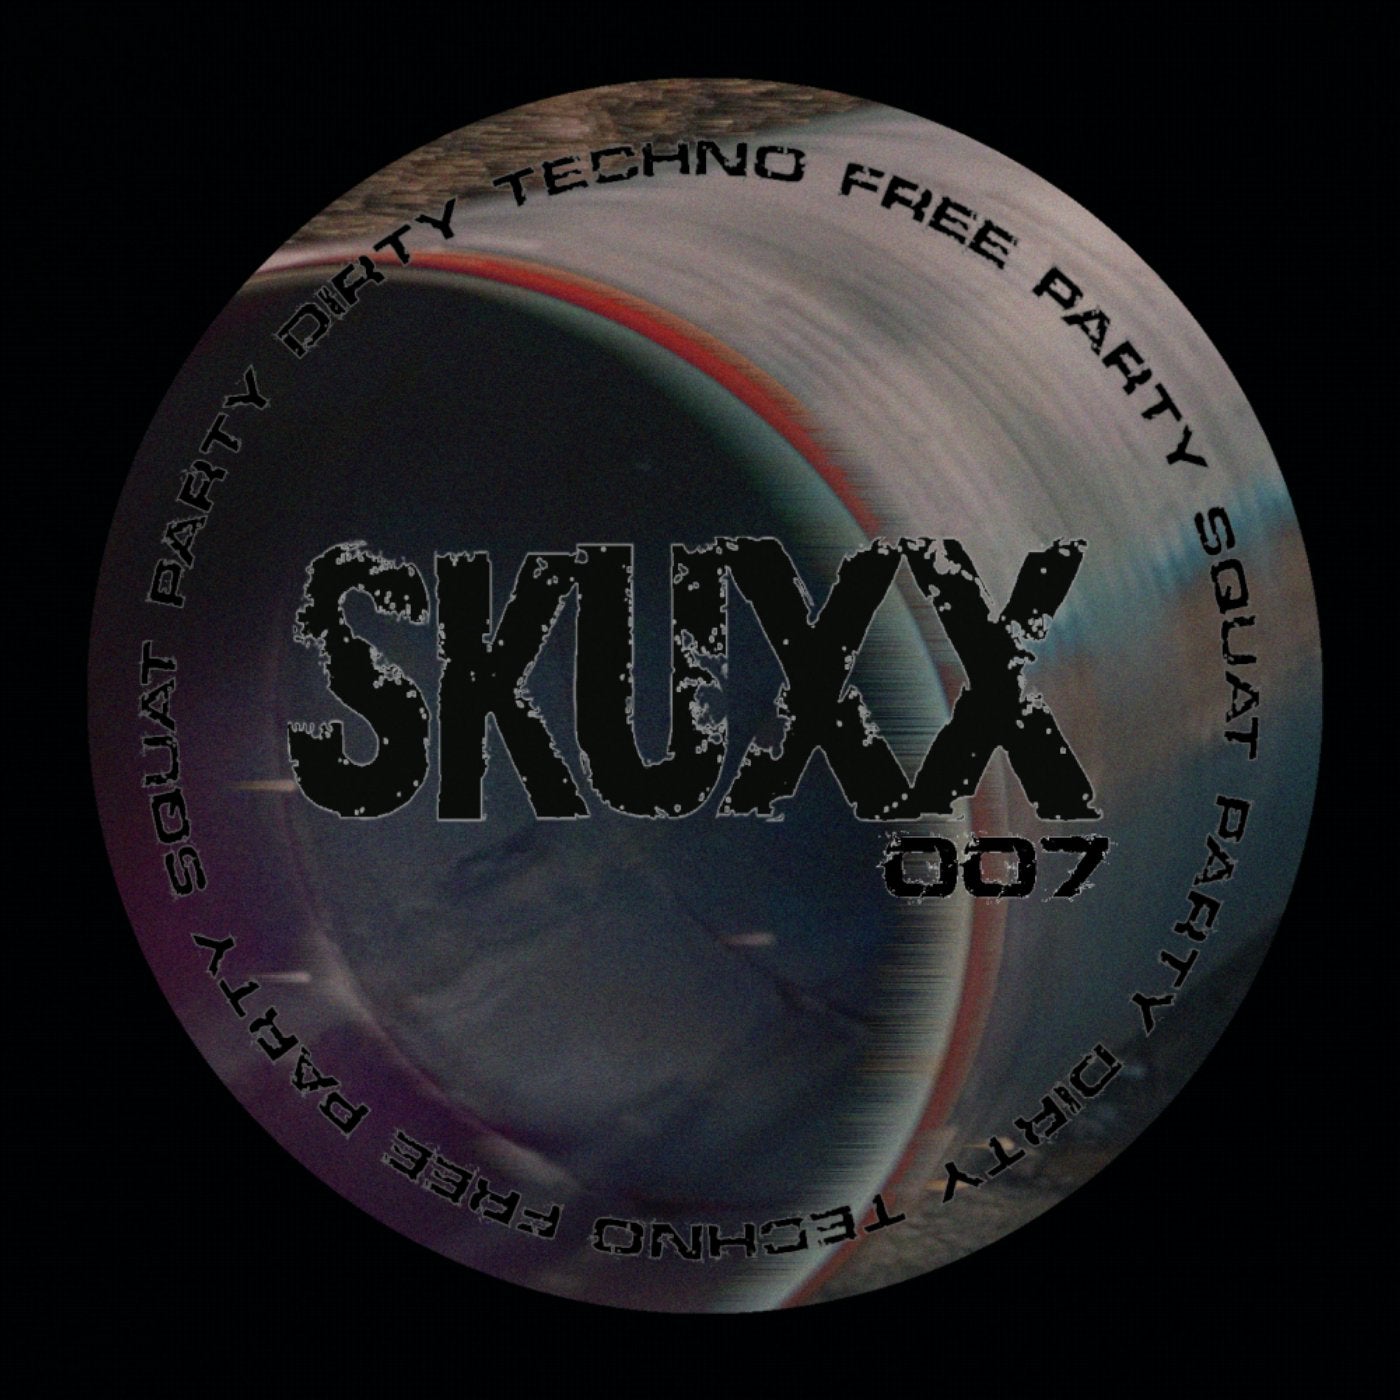 SKUXX007